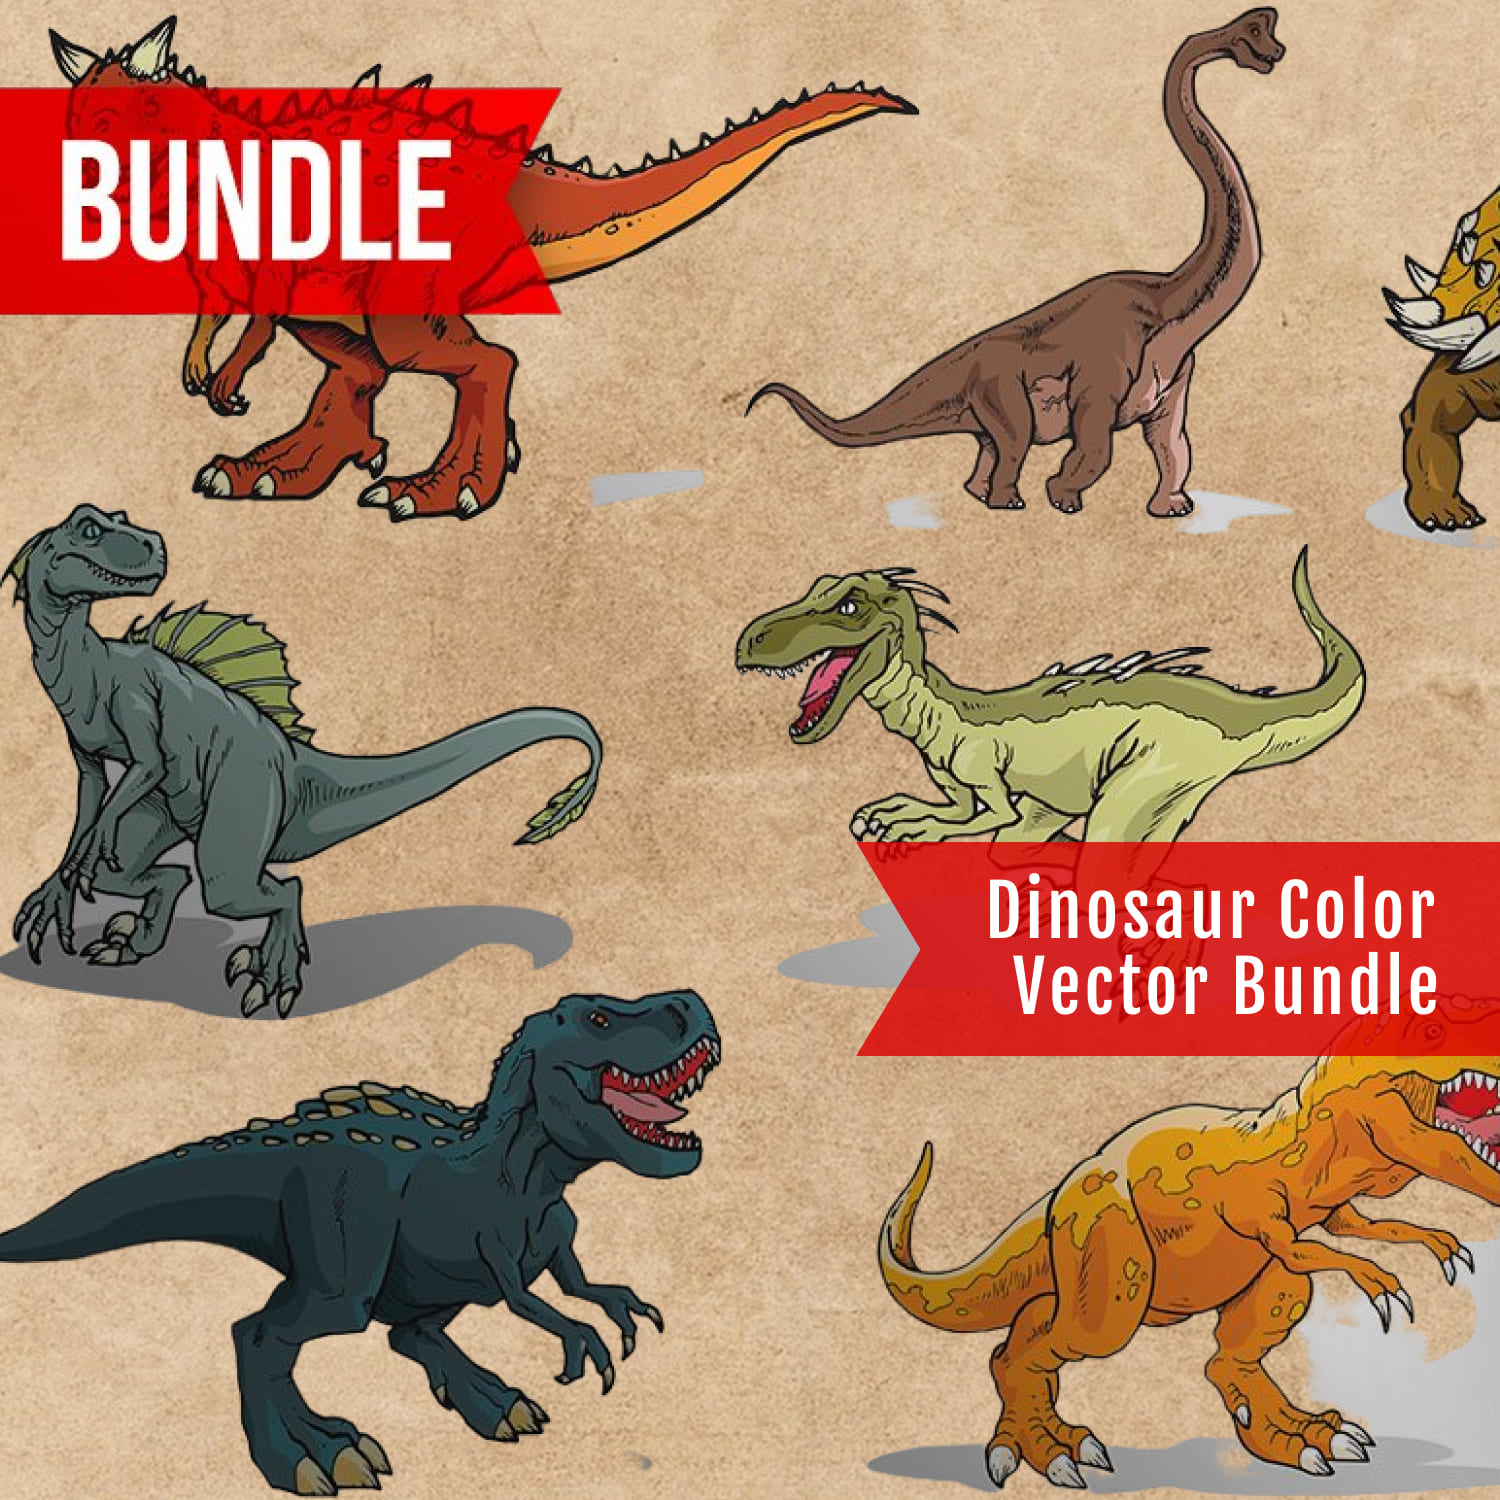 Dinosaur Color Vector Bundle cover image.